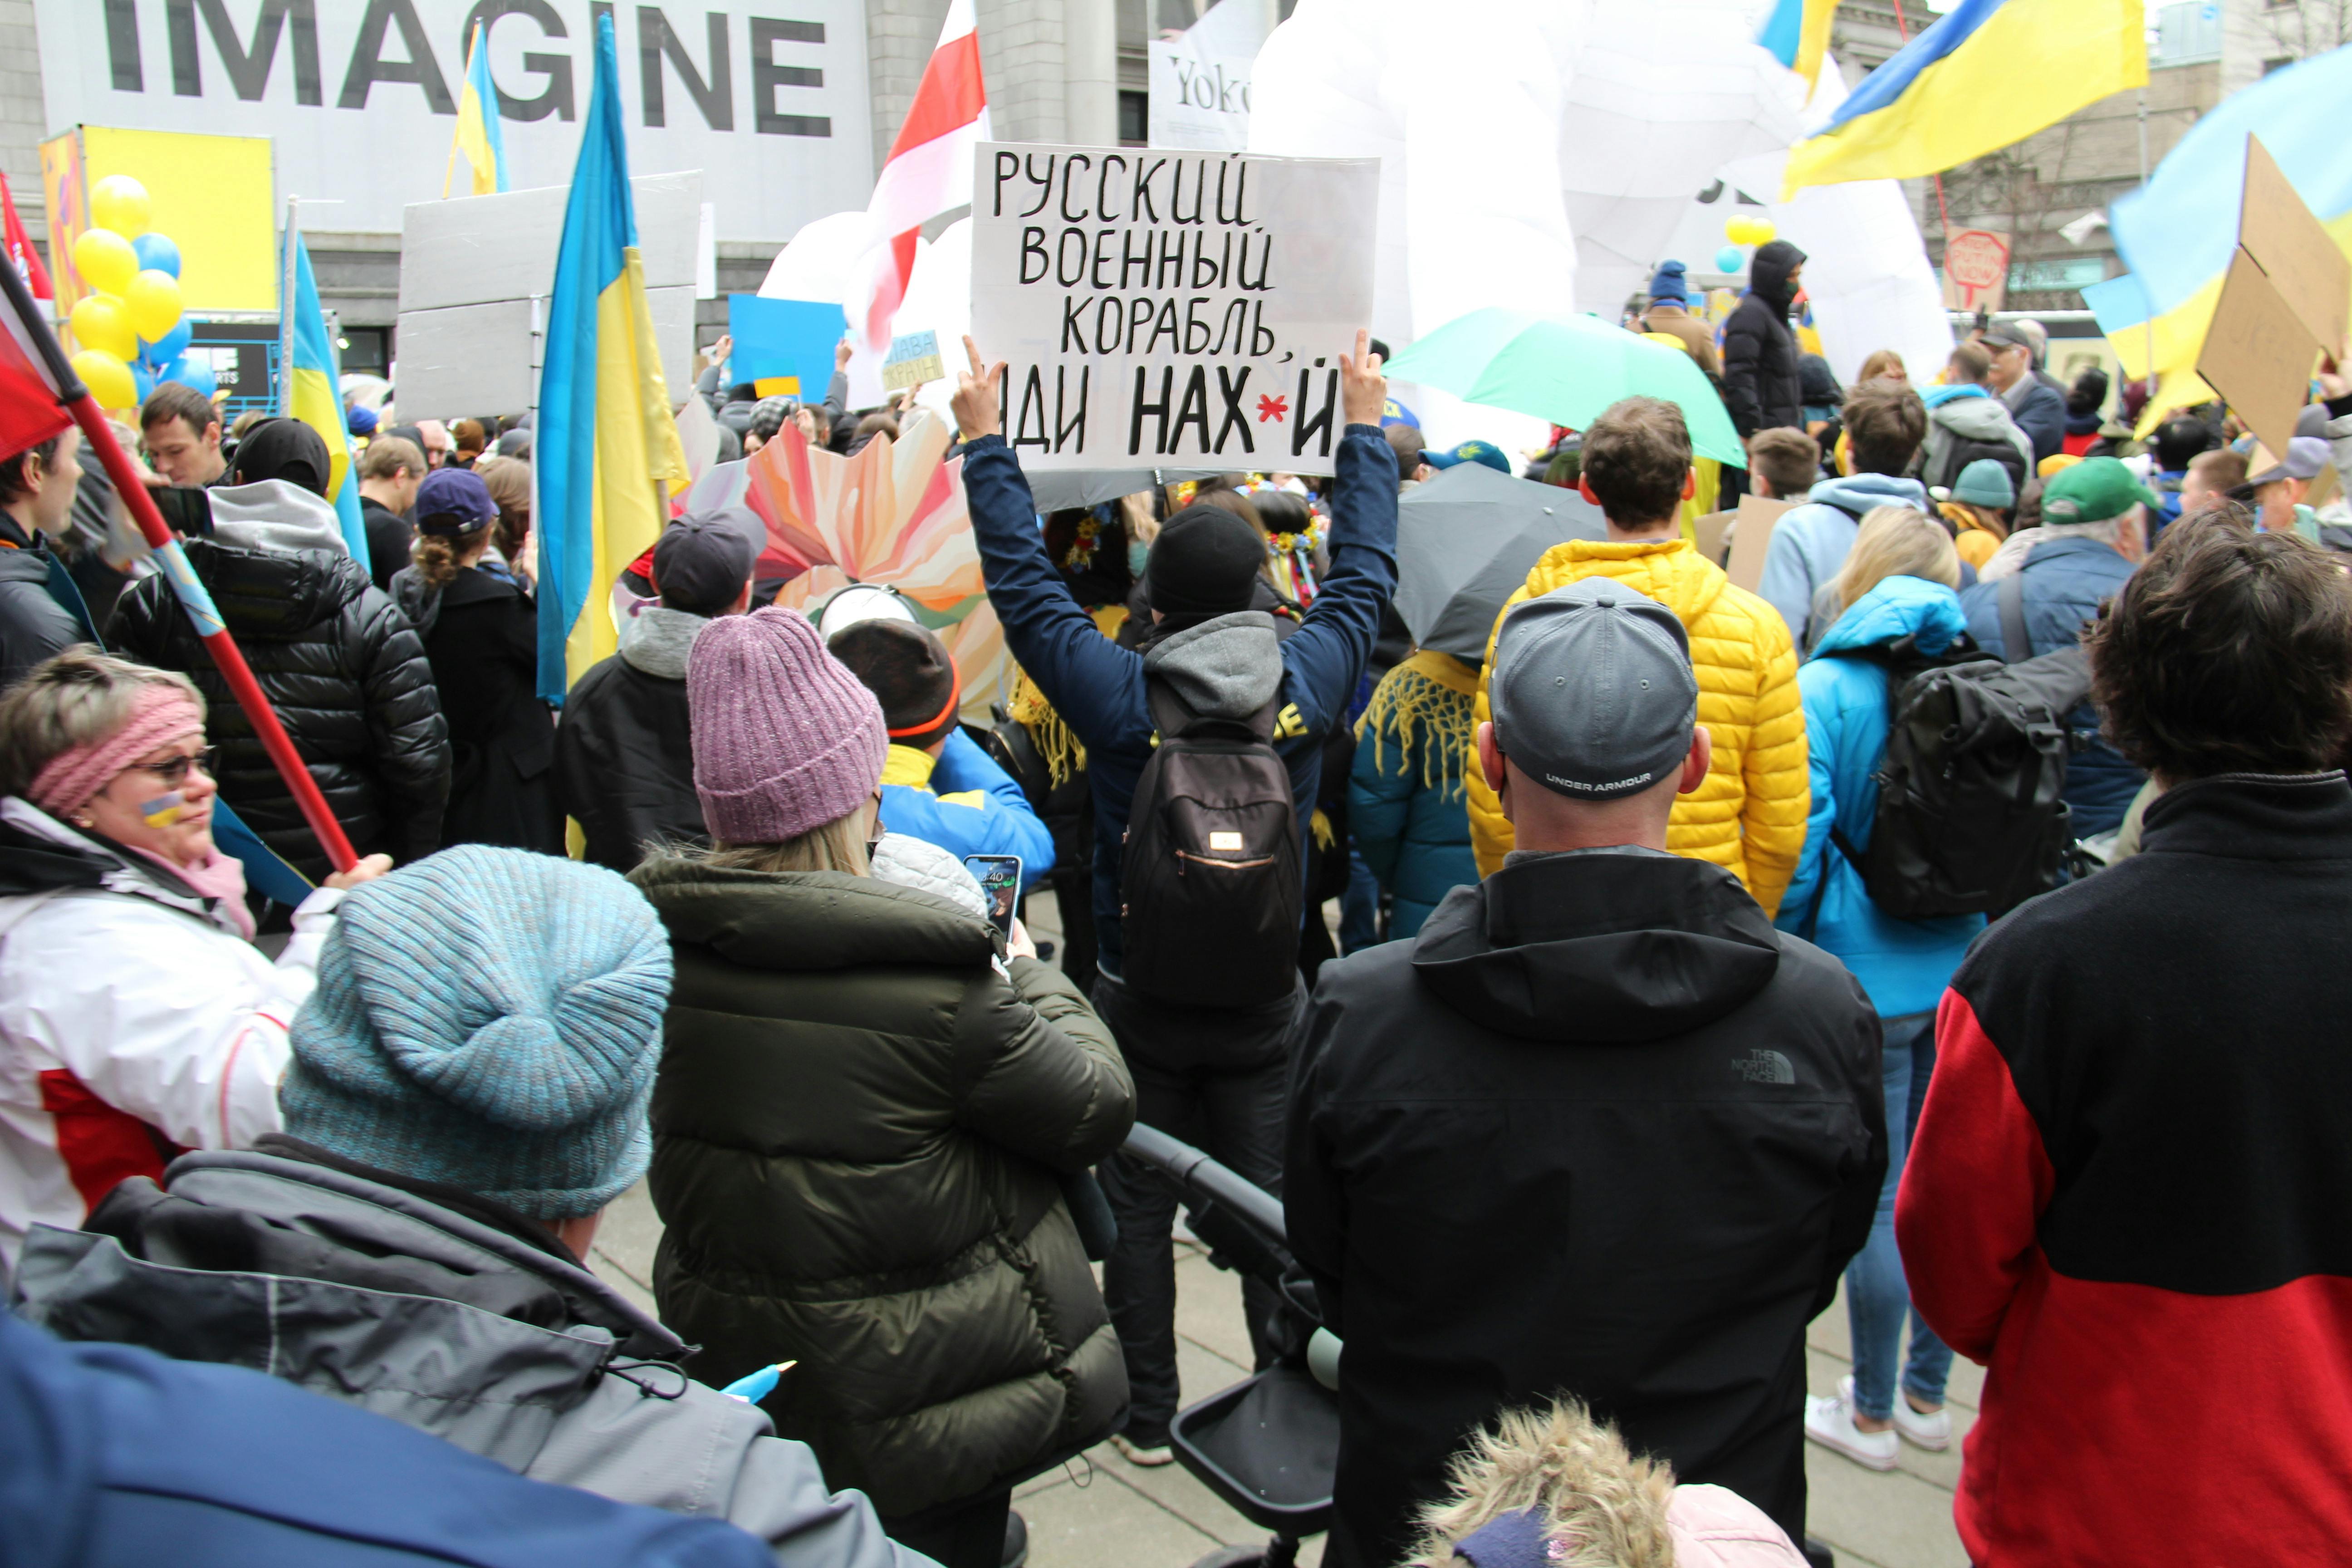 demonstrations in solidarity with ukraine